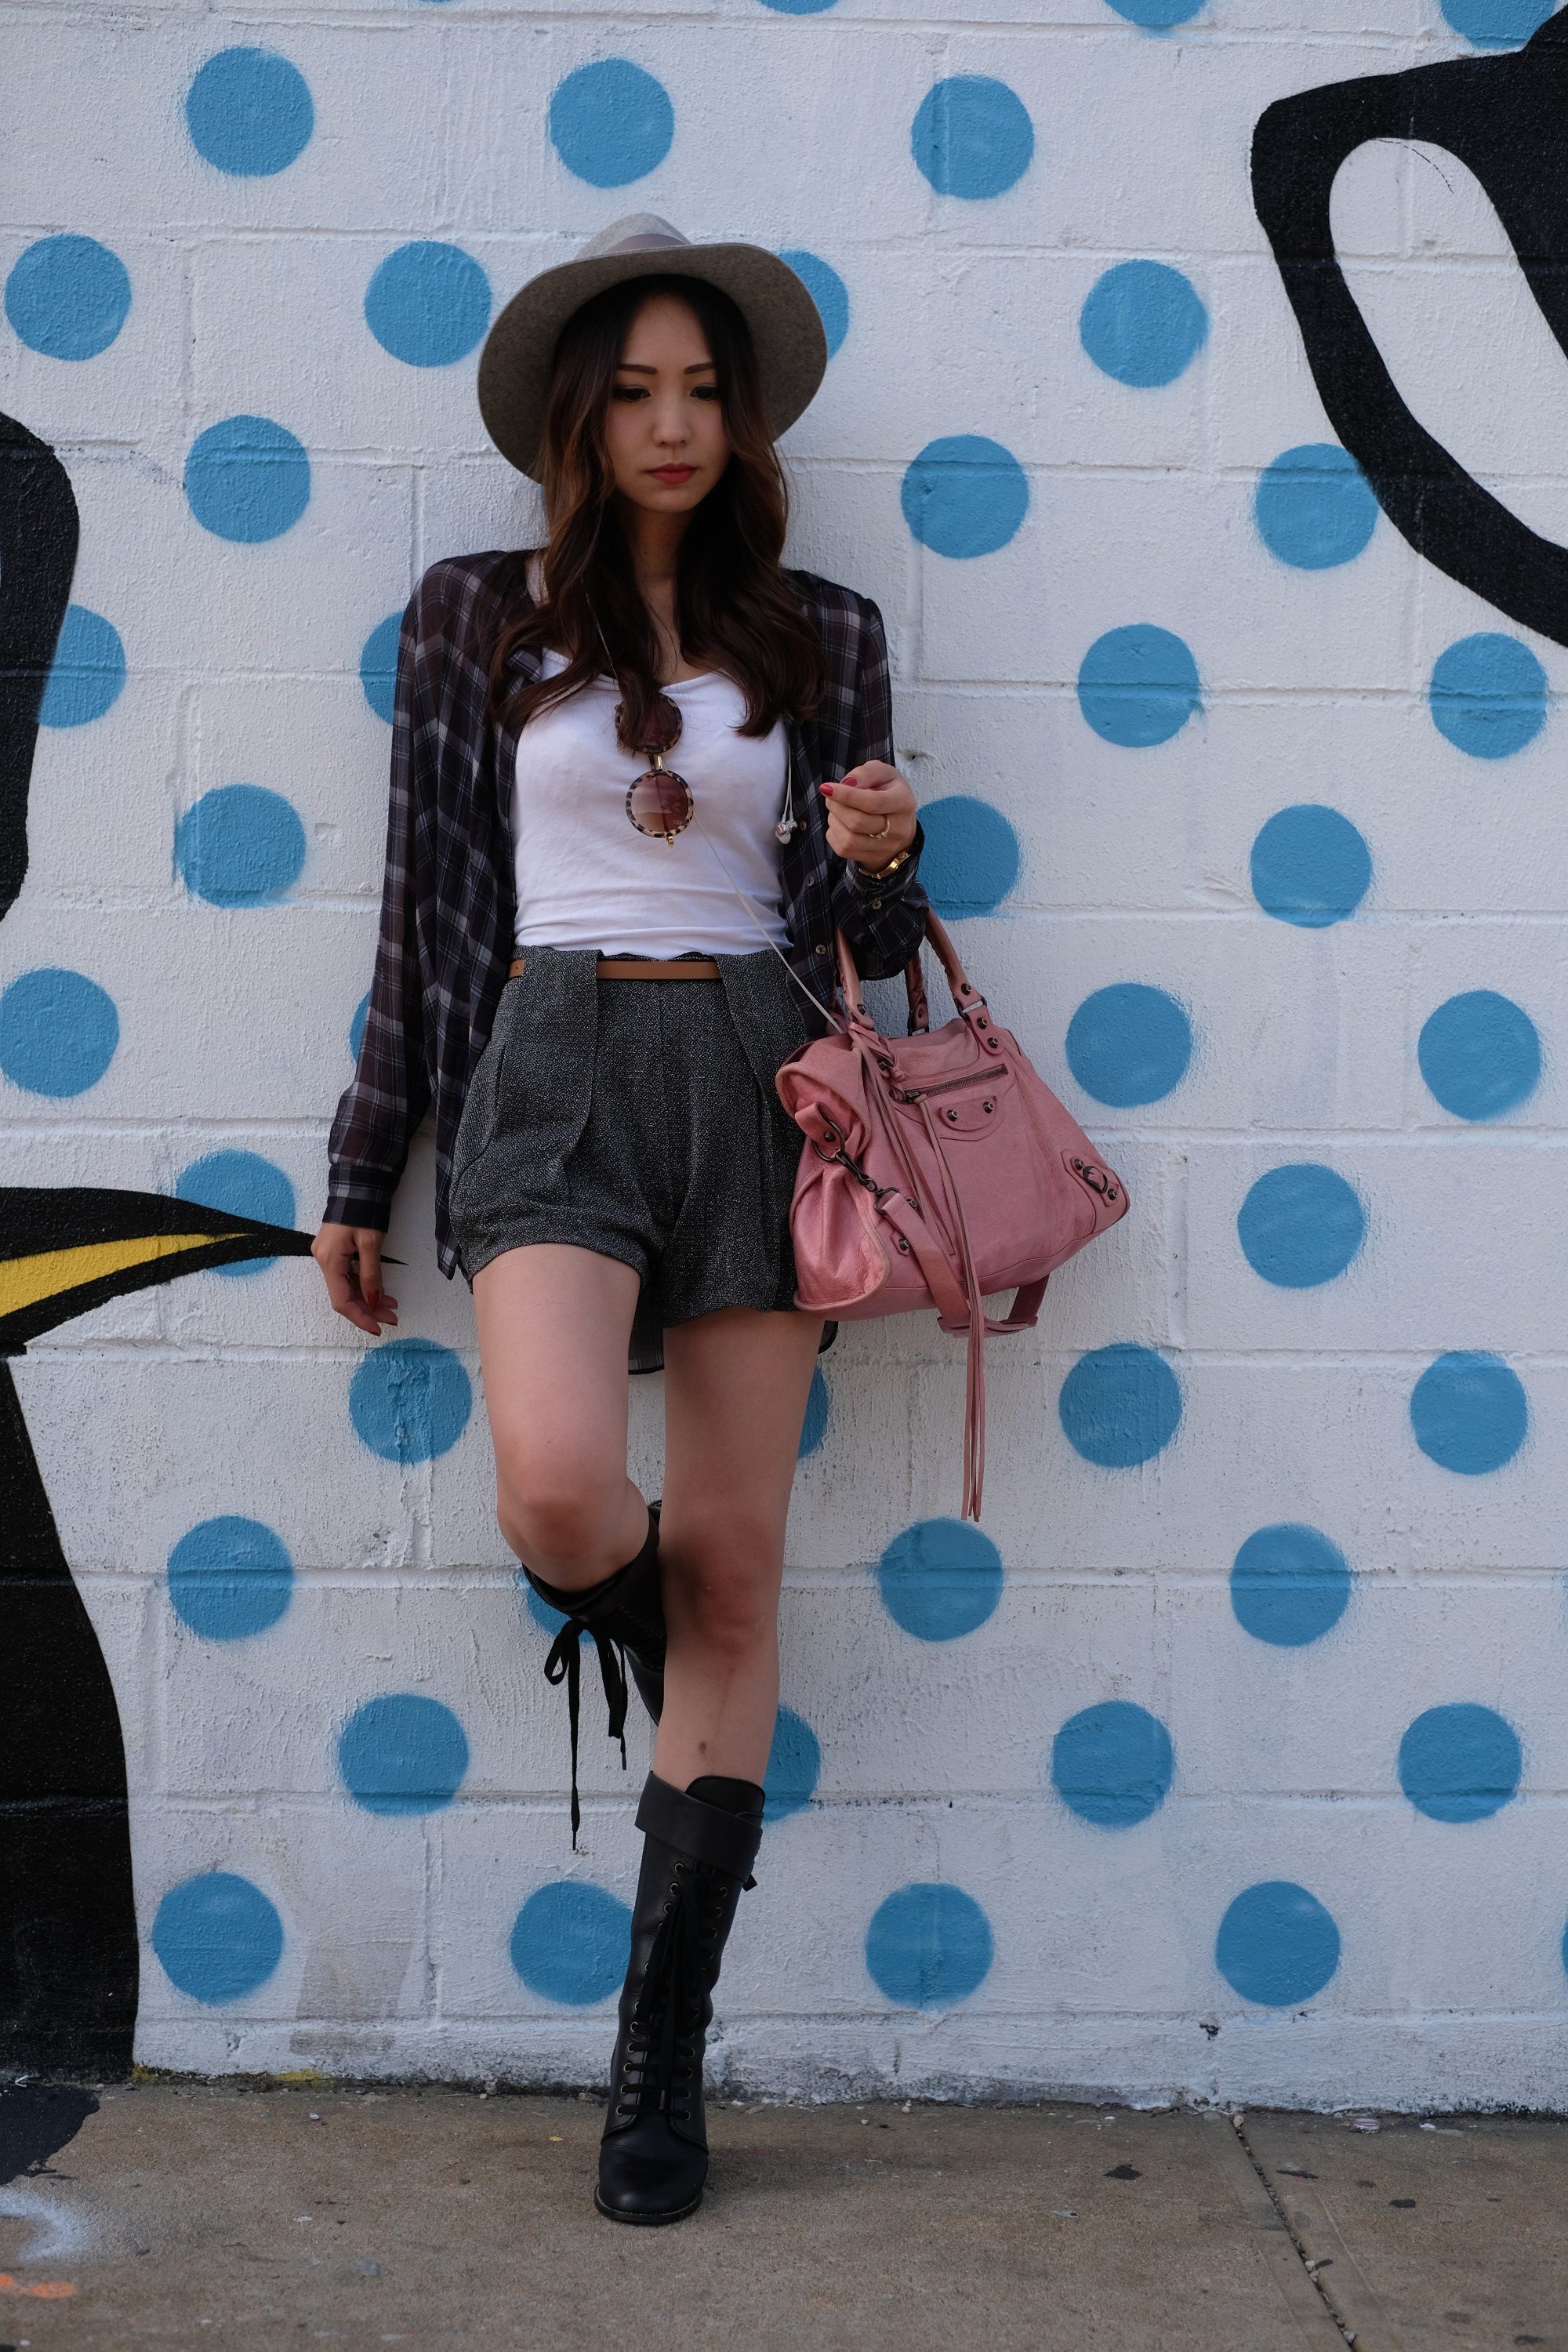 pretty Japanese girl in front of street art